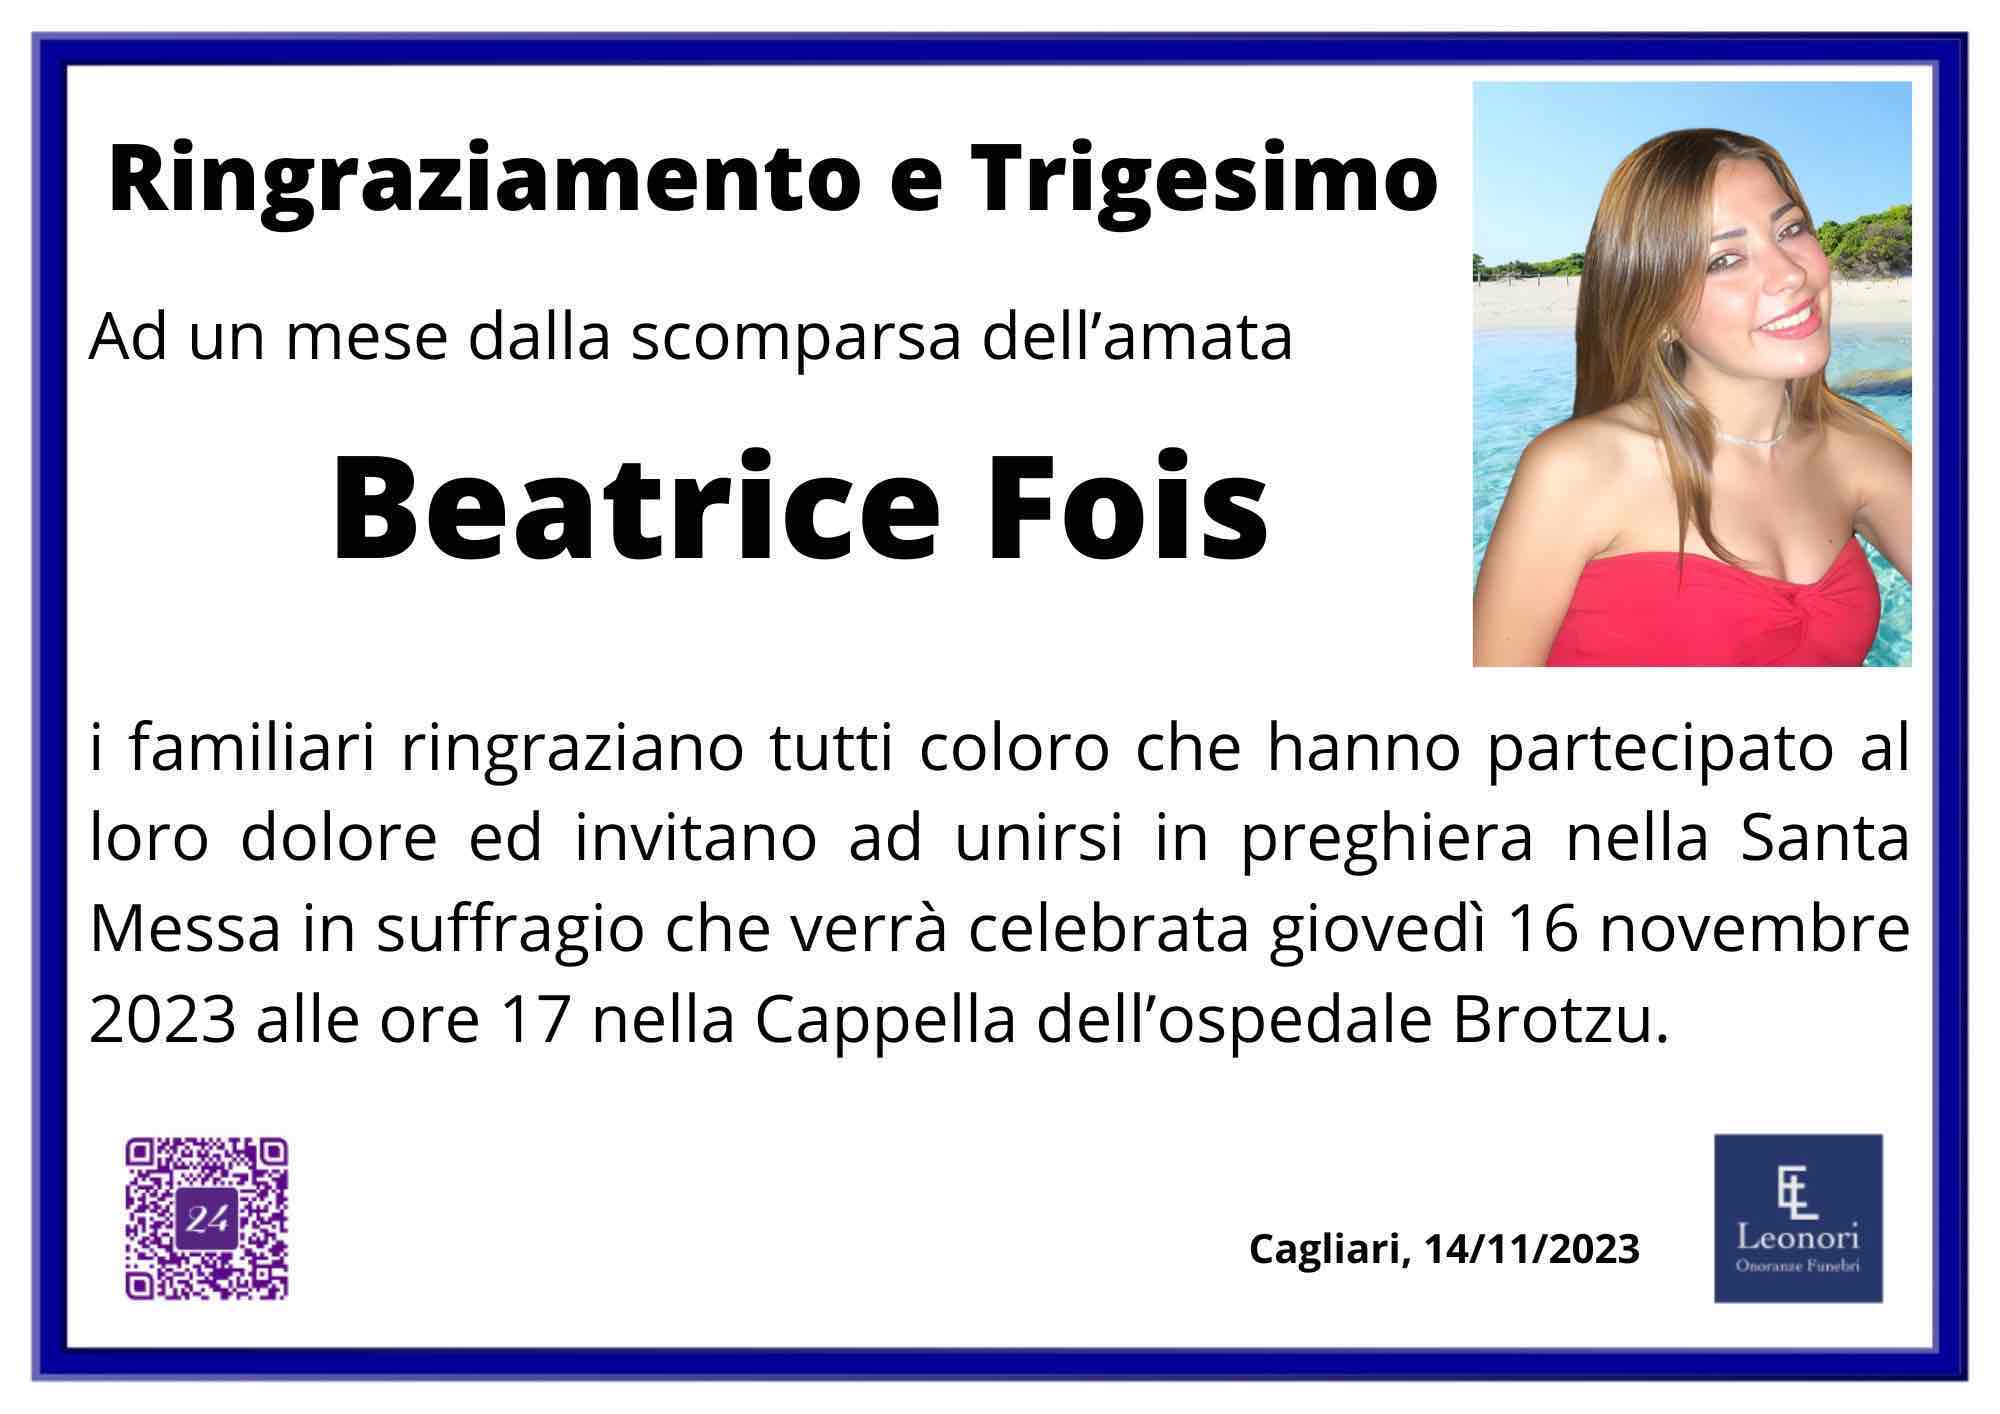 Beatrice Fois